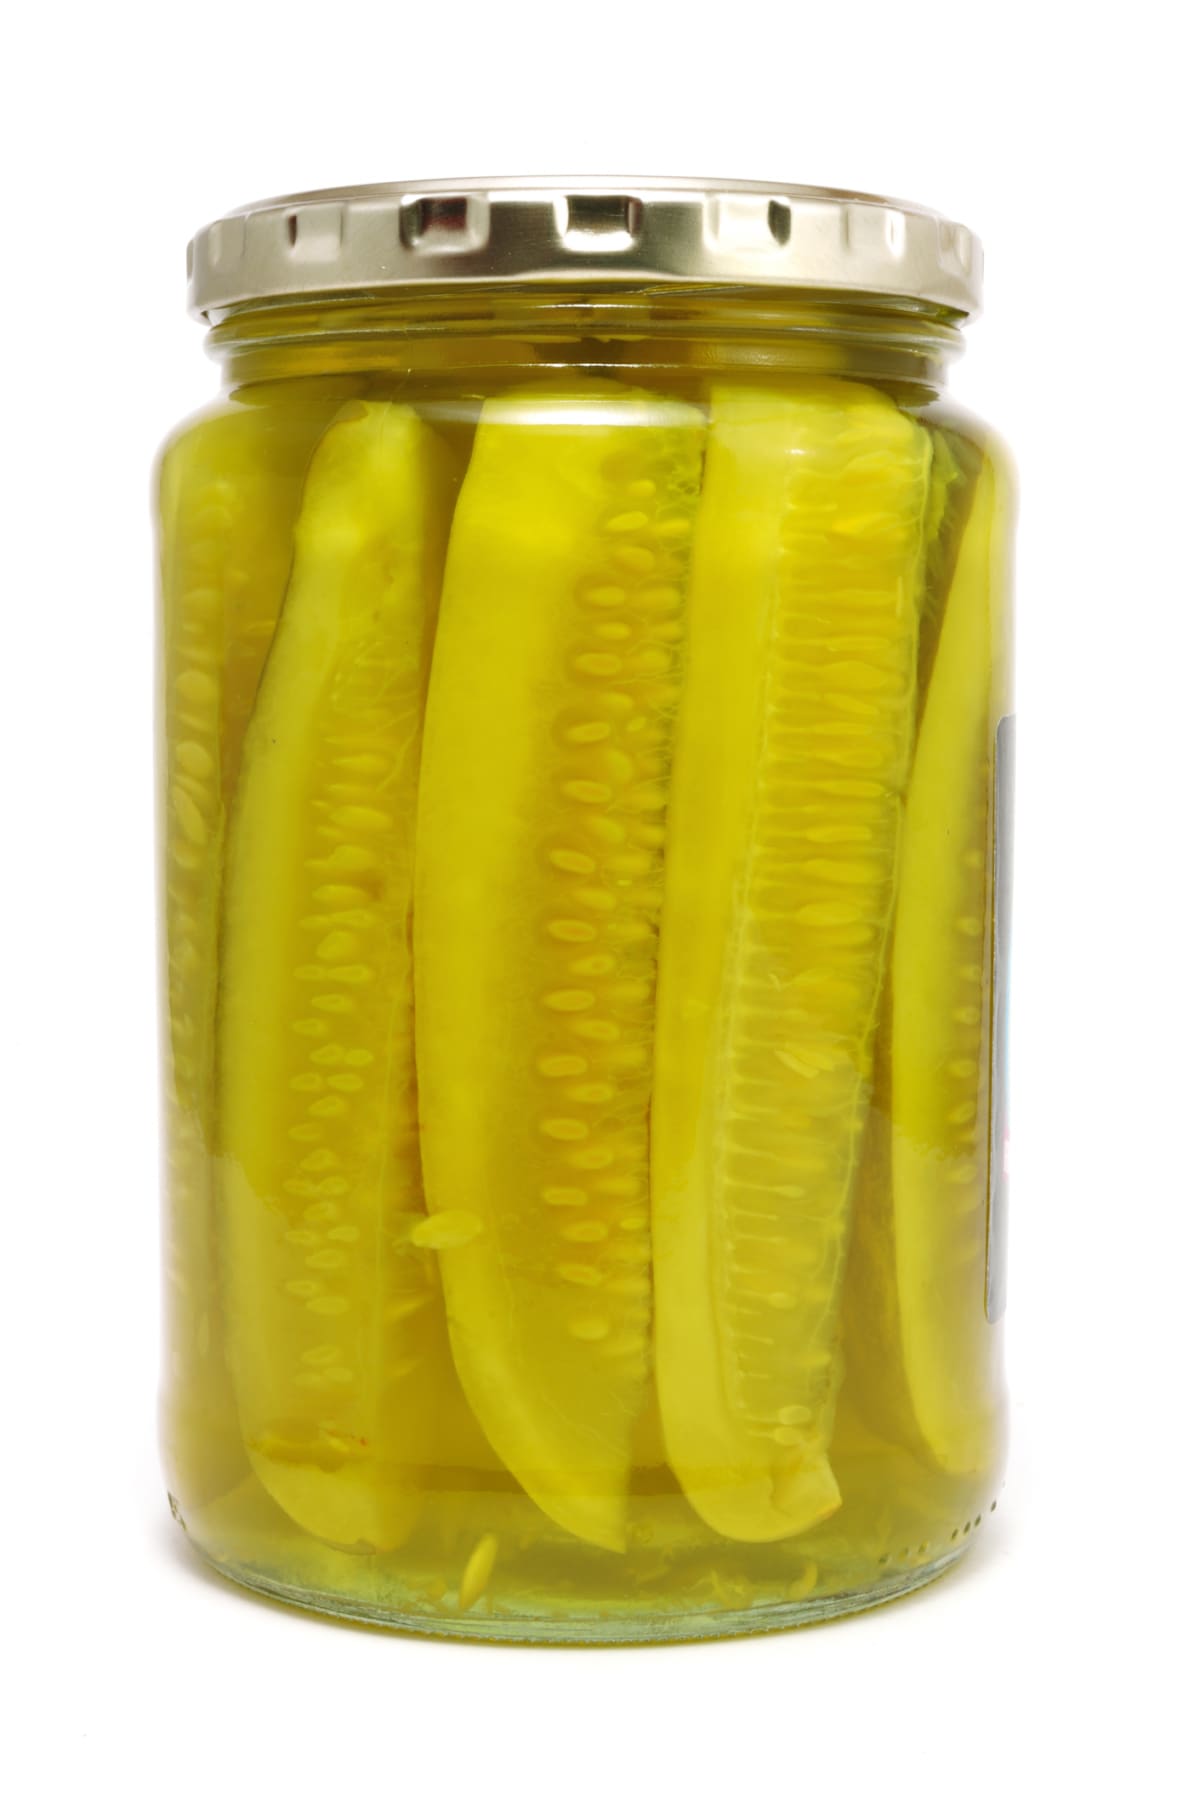 A sealed pickle jar